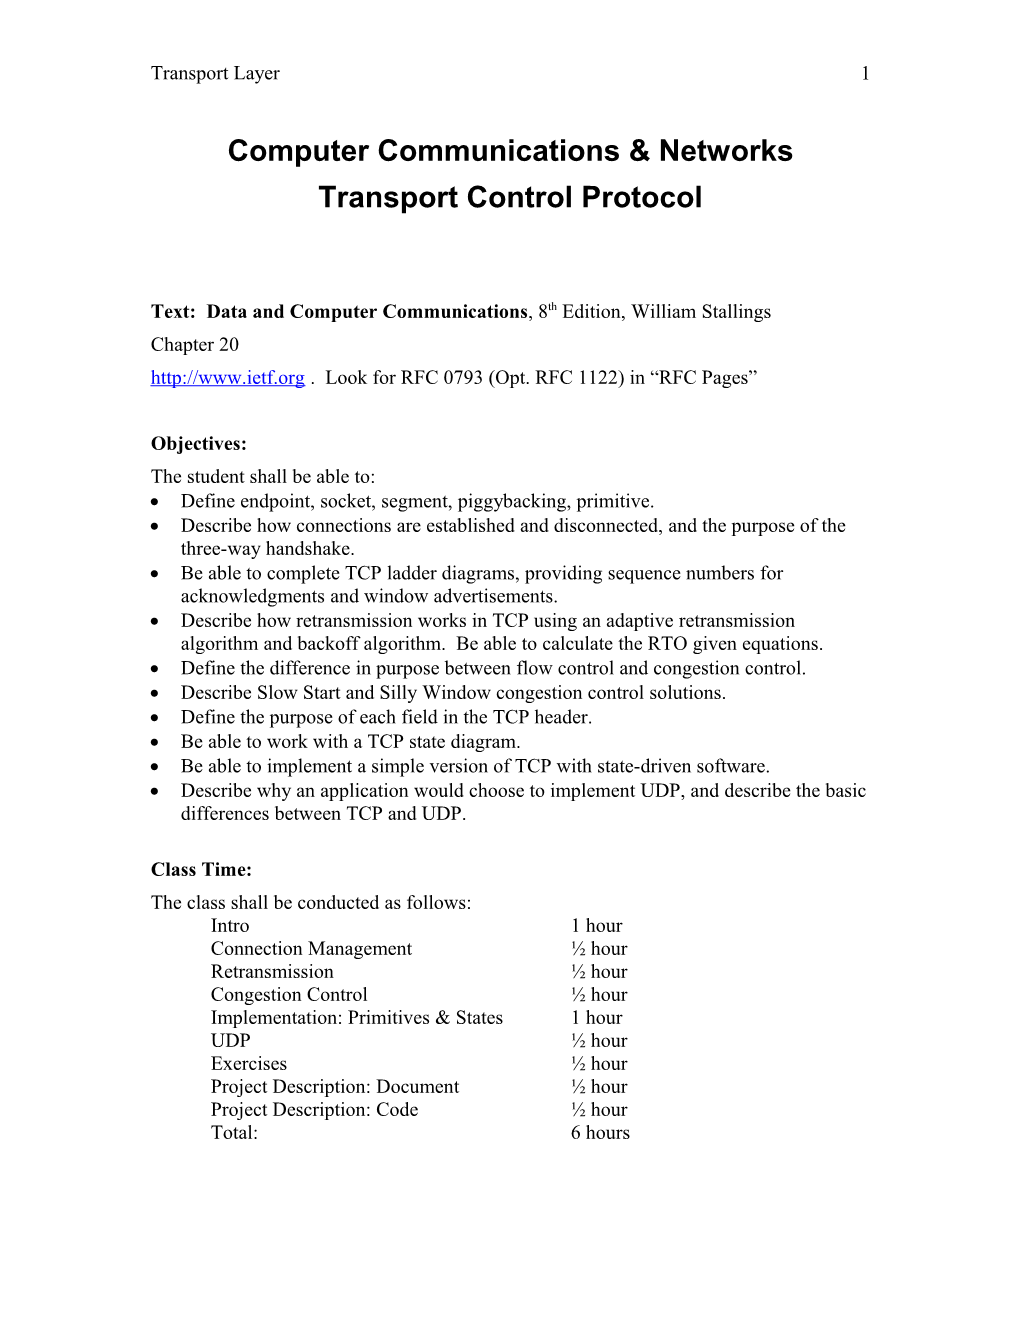 Transport Control Protocol